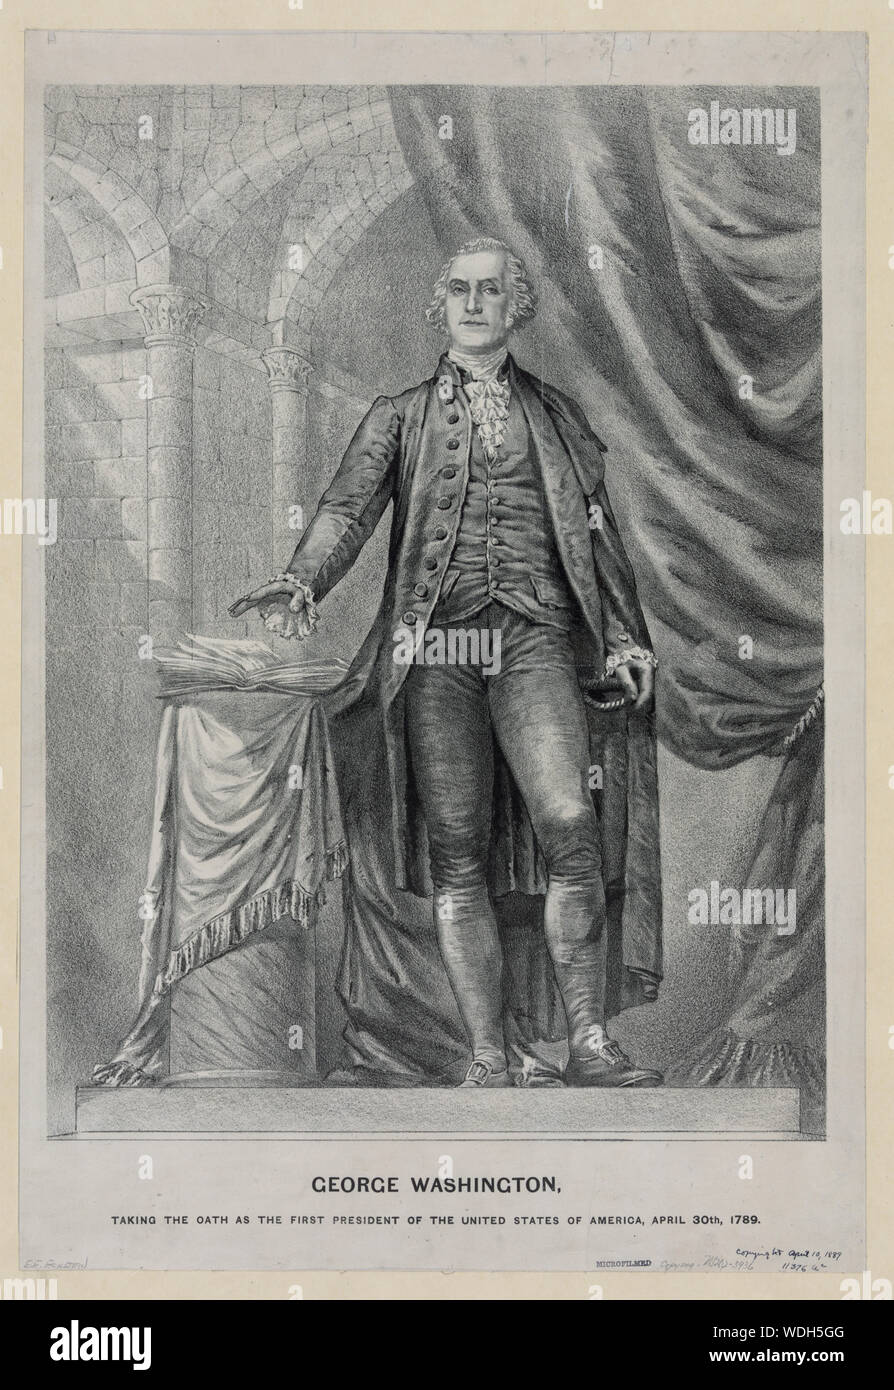 George washington oath hi-res stock photography and images - Alamy